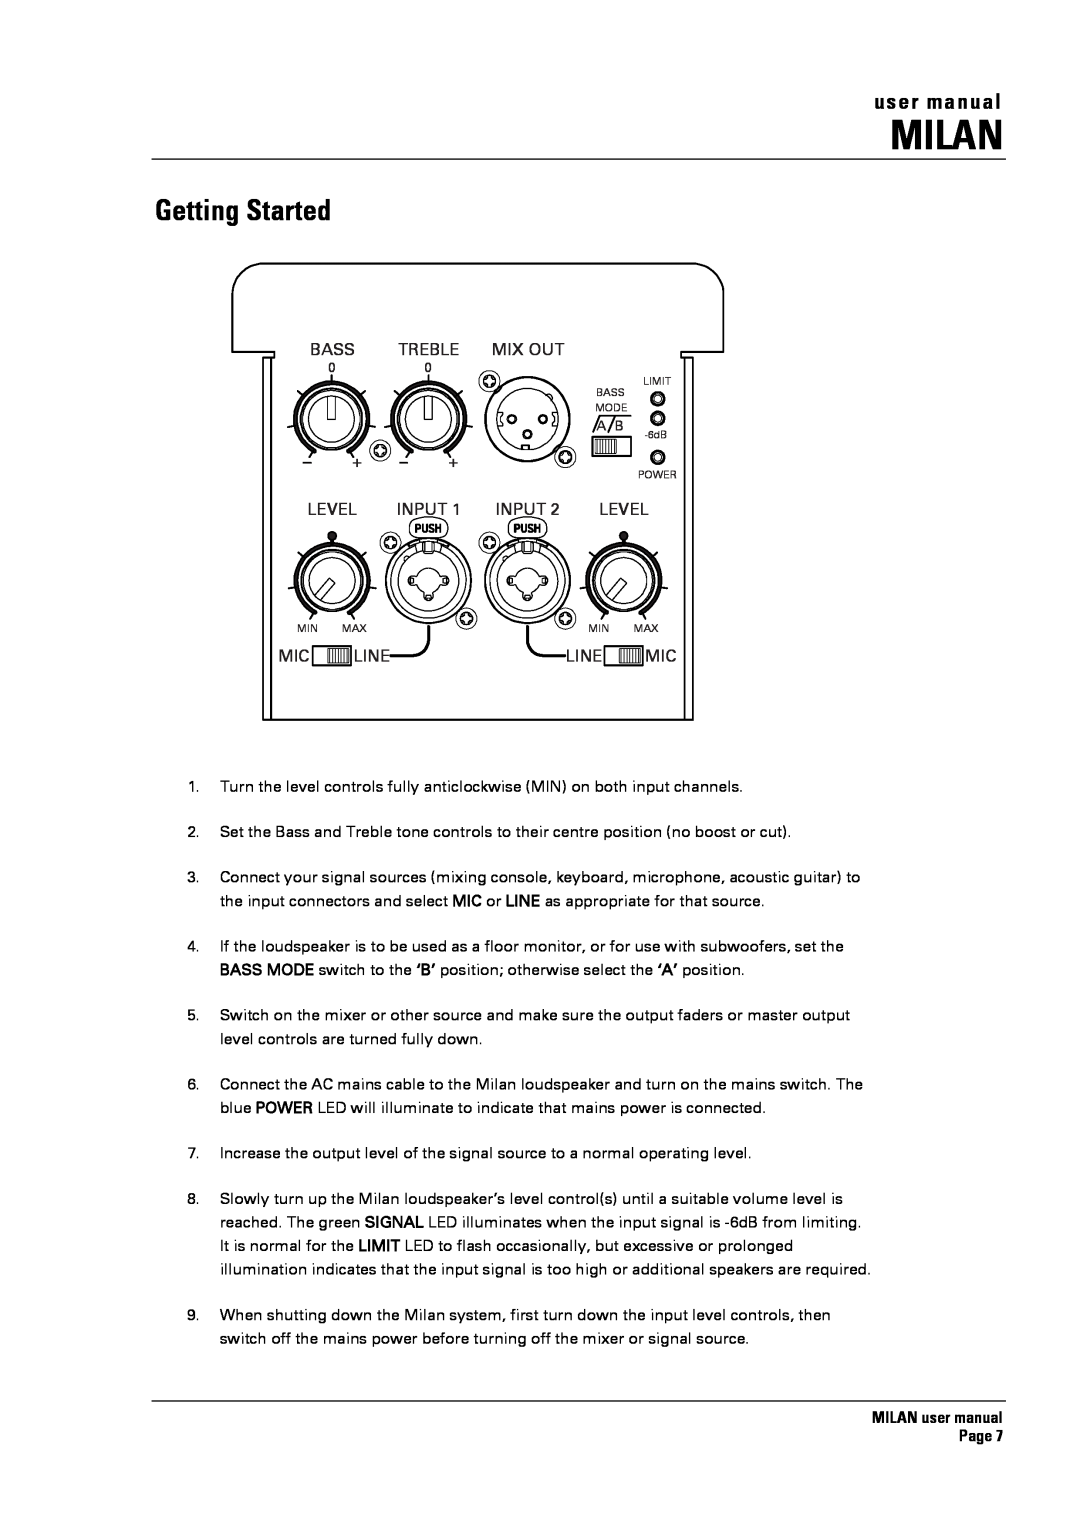 Turbosound MI5 Getting Started, Milan, user manual 